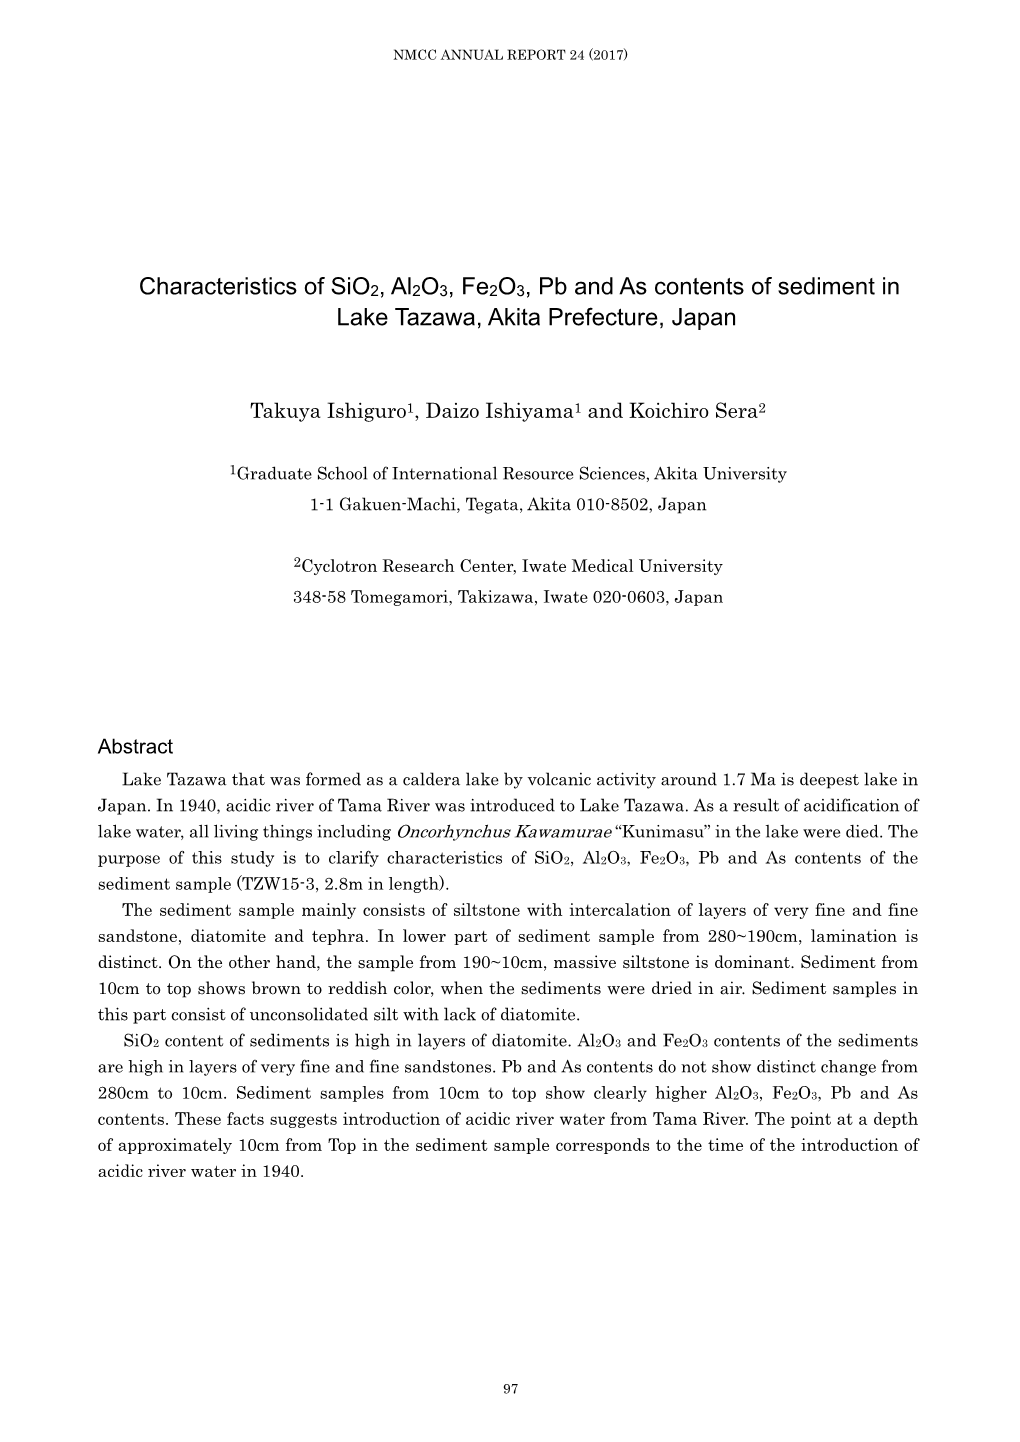 Characteristics of Sio2, Al2o3, Fe2o3, Pb and As Contents of Sediment in Lake Tazawa, Akita Prefecture, Japan